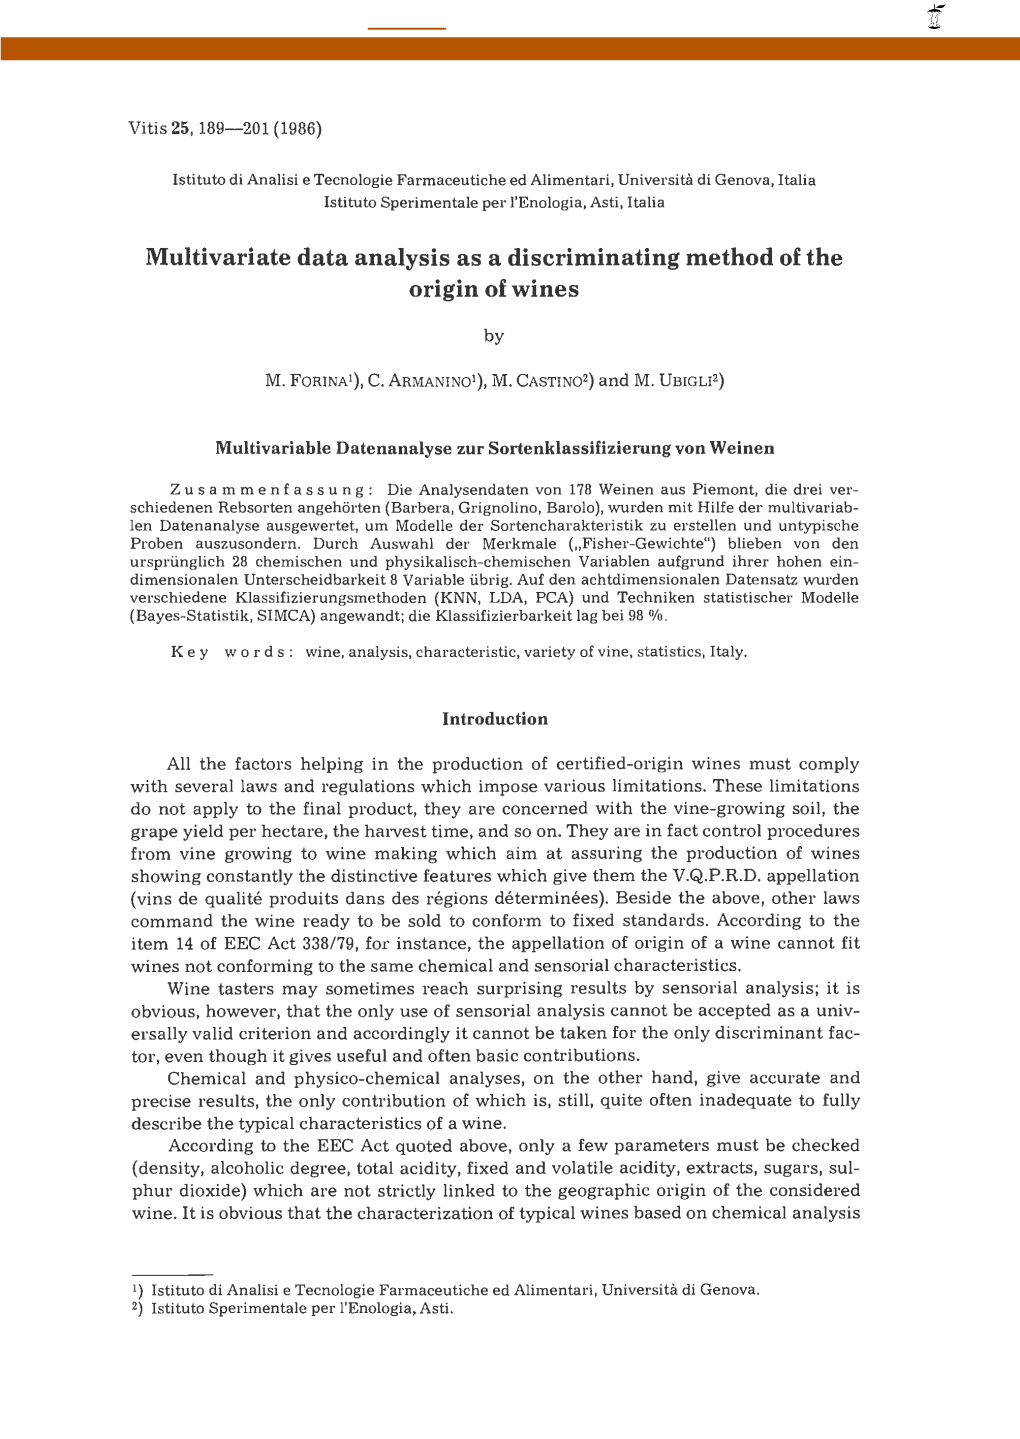 Multivariate Data Analysis As a Discriminating Method of the Origin of Wines